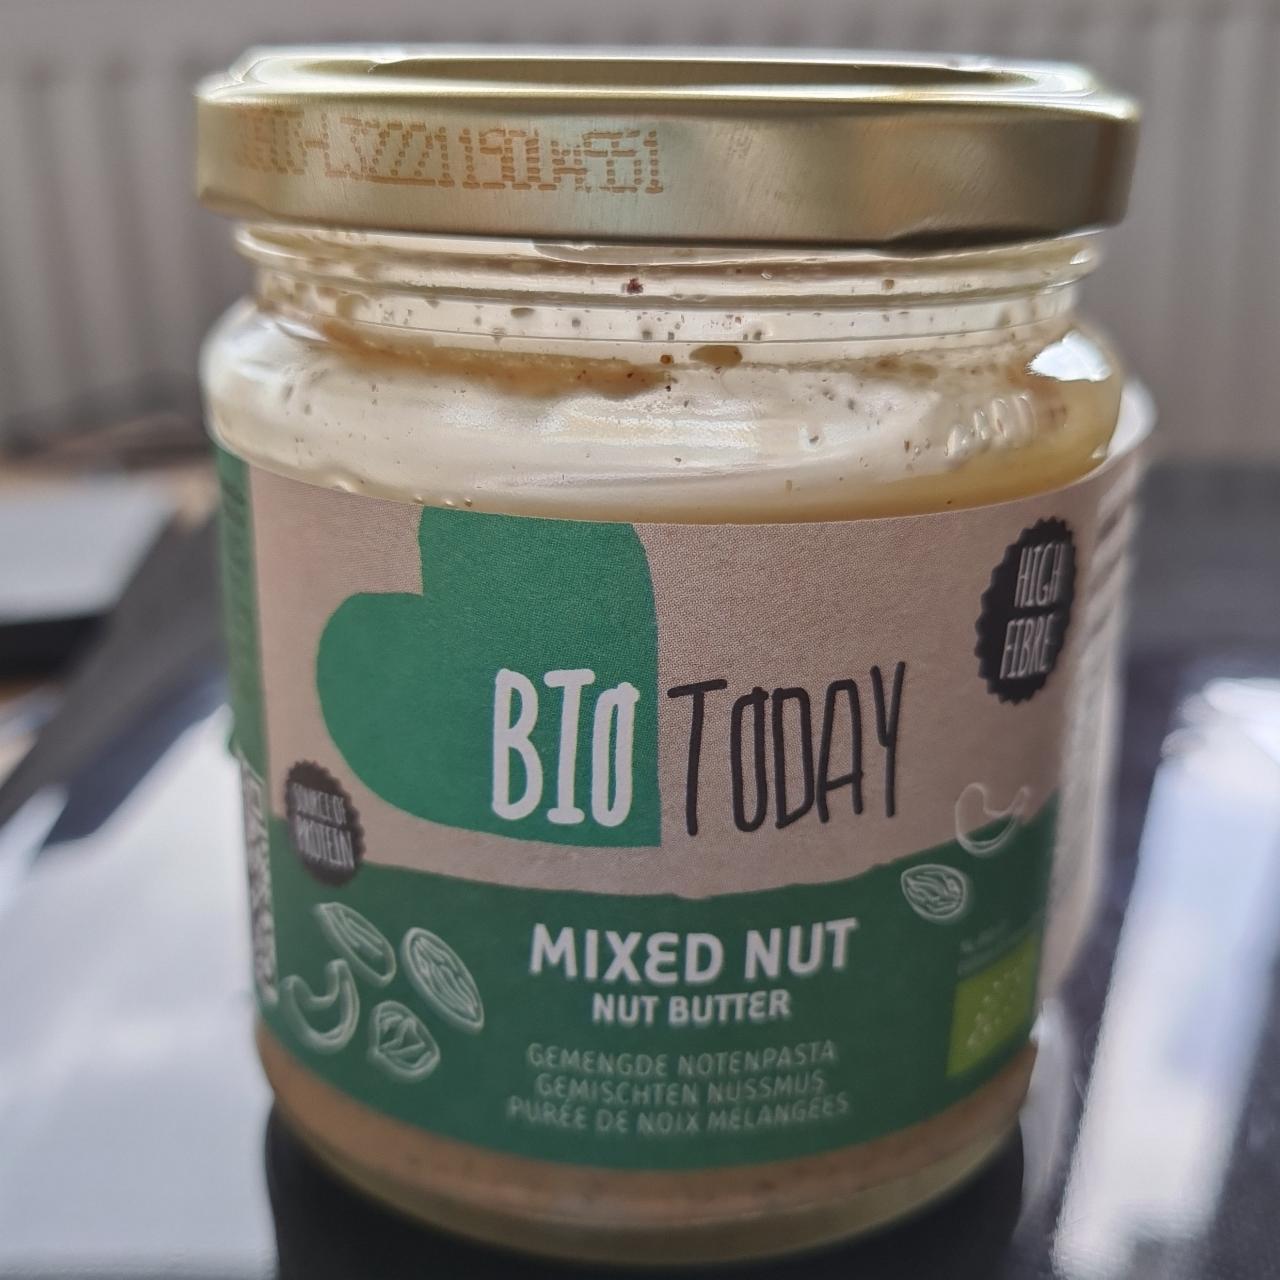 Fotografie - Mixed nut Nut butter Bio Today